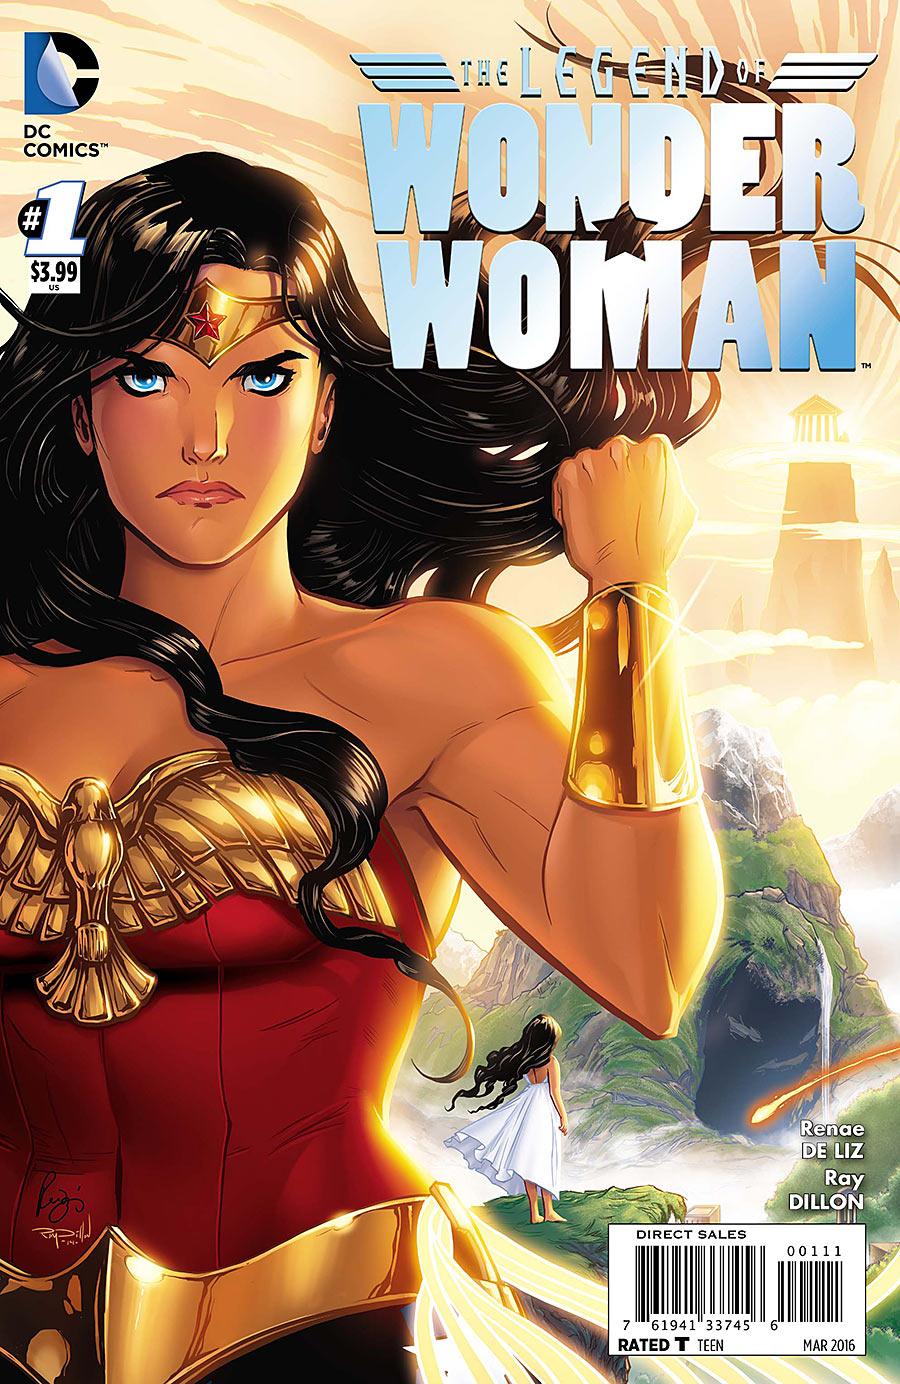 The Legend of Wonder Woman Vol. 2 #1